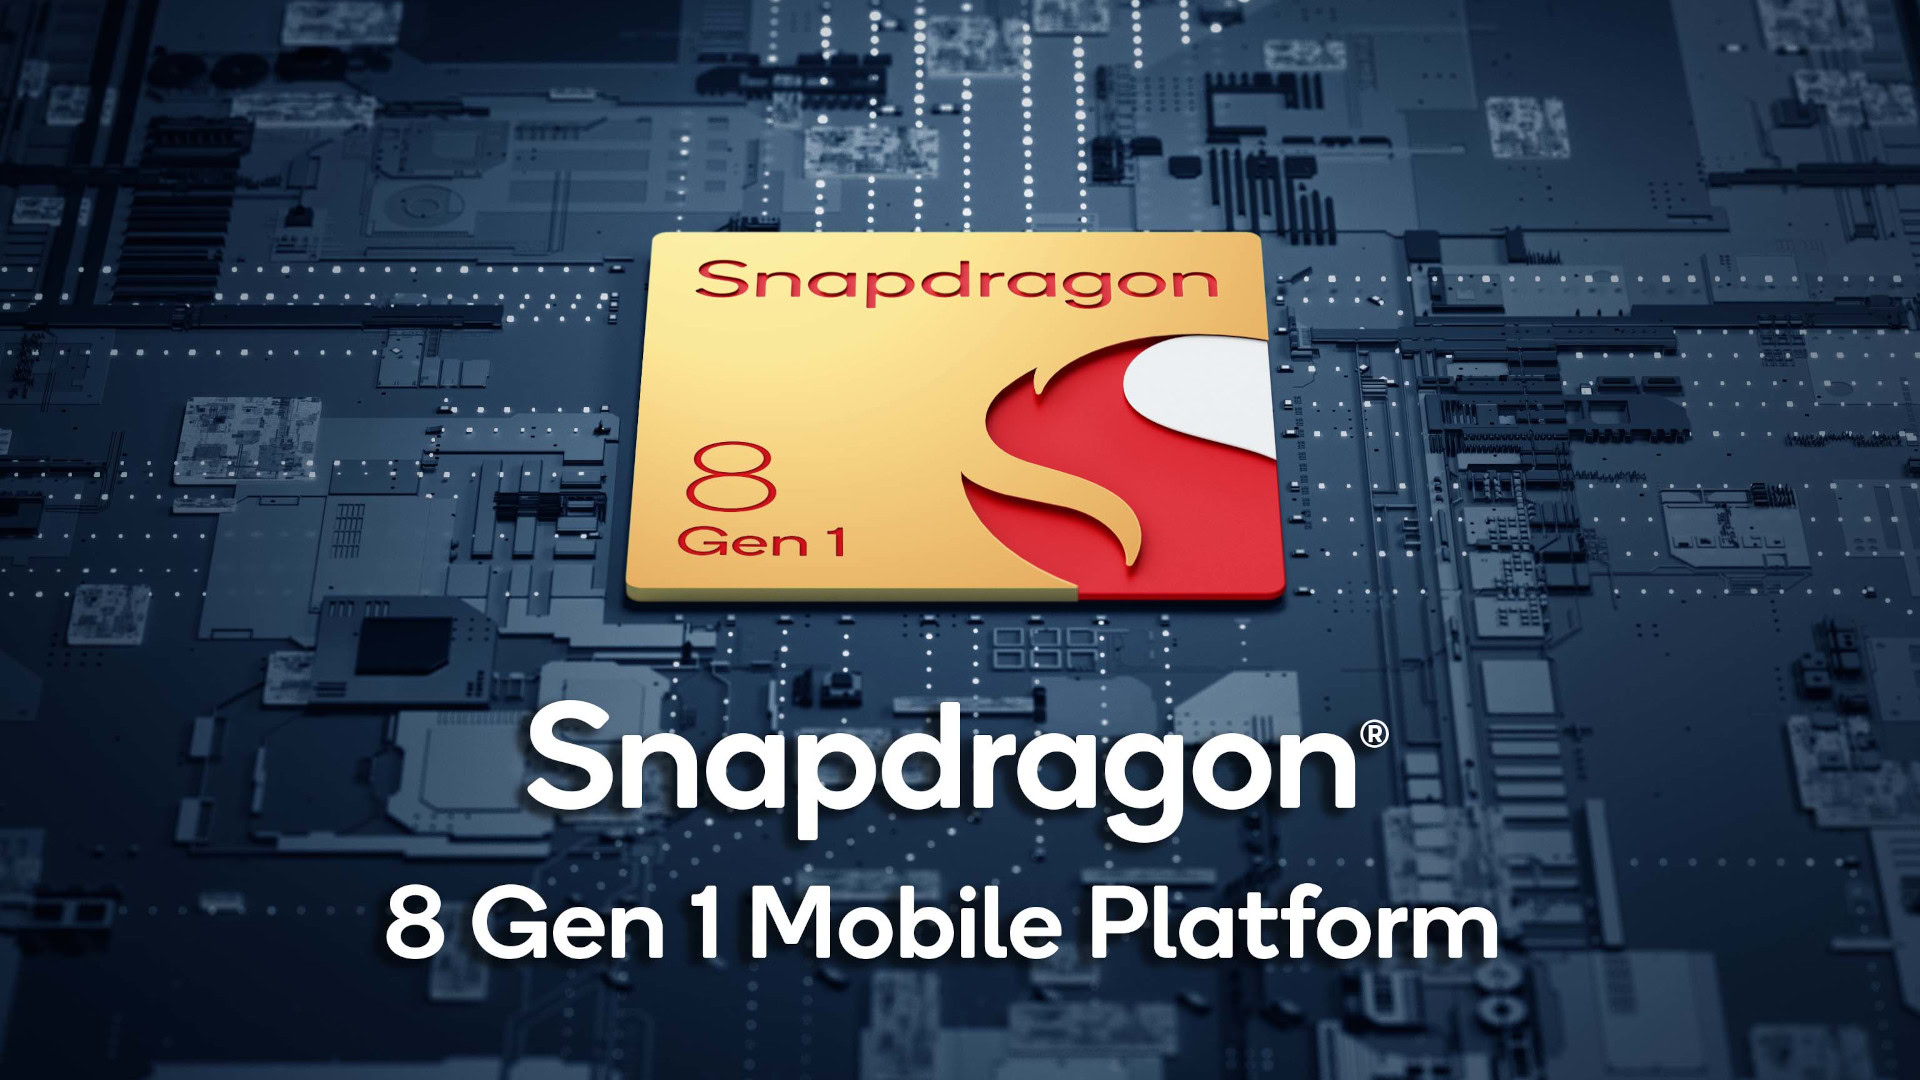 Qualcomm Snapdragon 8 Gen 1 deep dive: Specs, features, and more